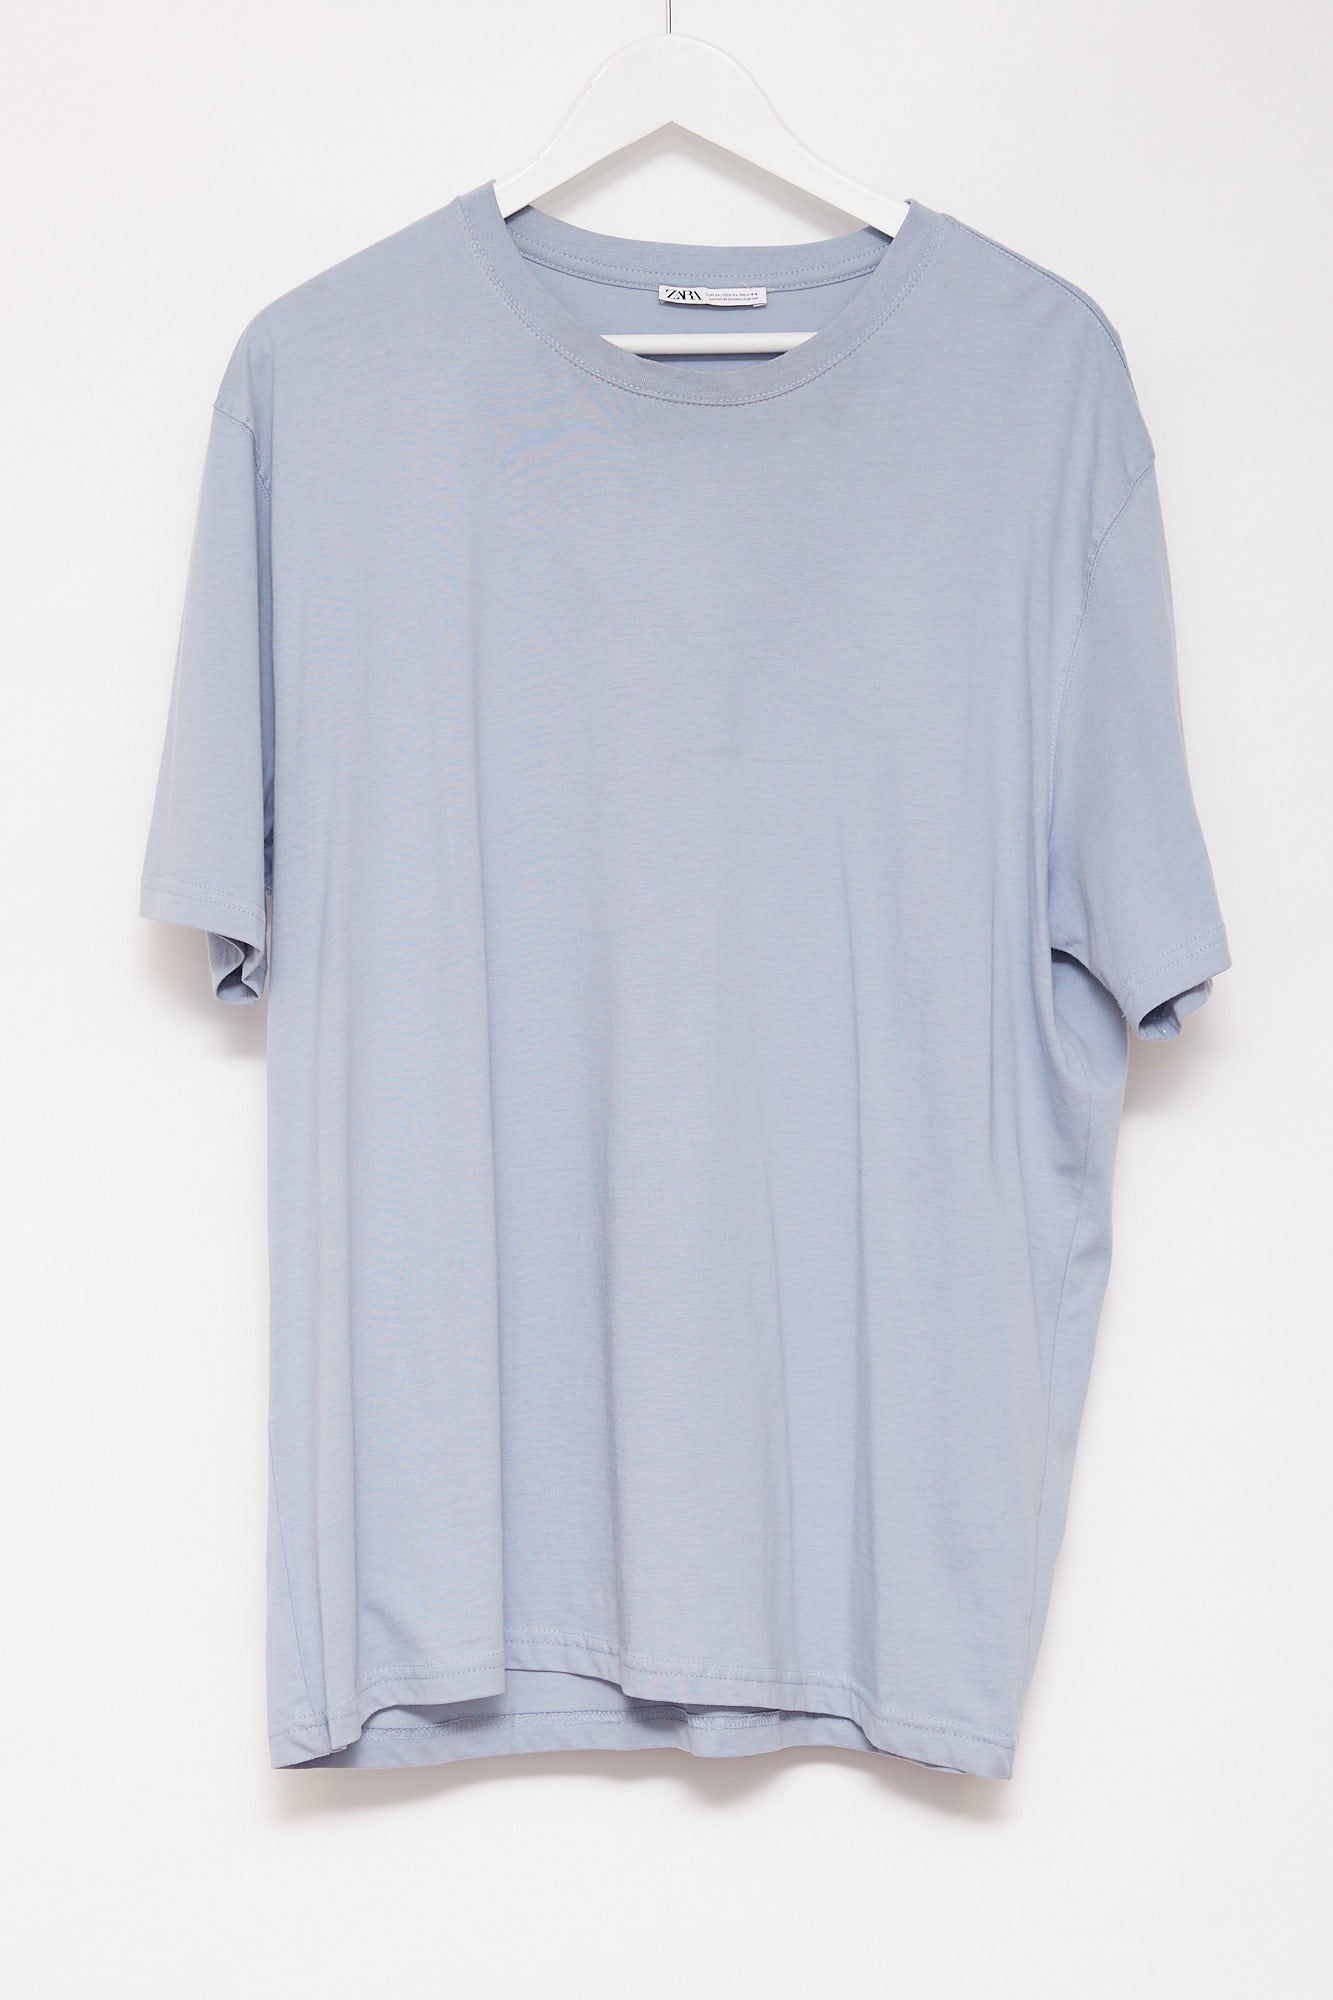 Mens Zara Light Blue T-shirt: Size Extra Large